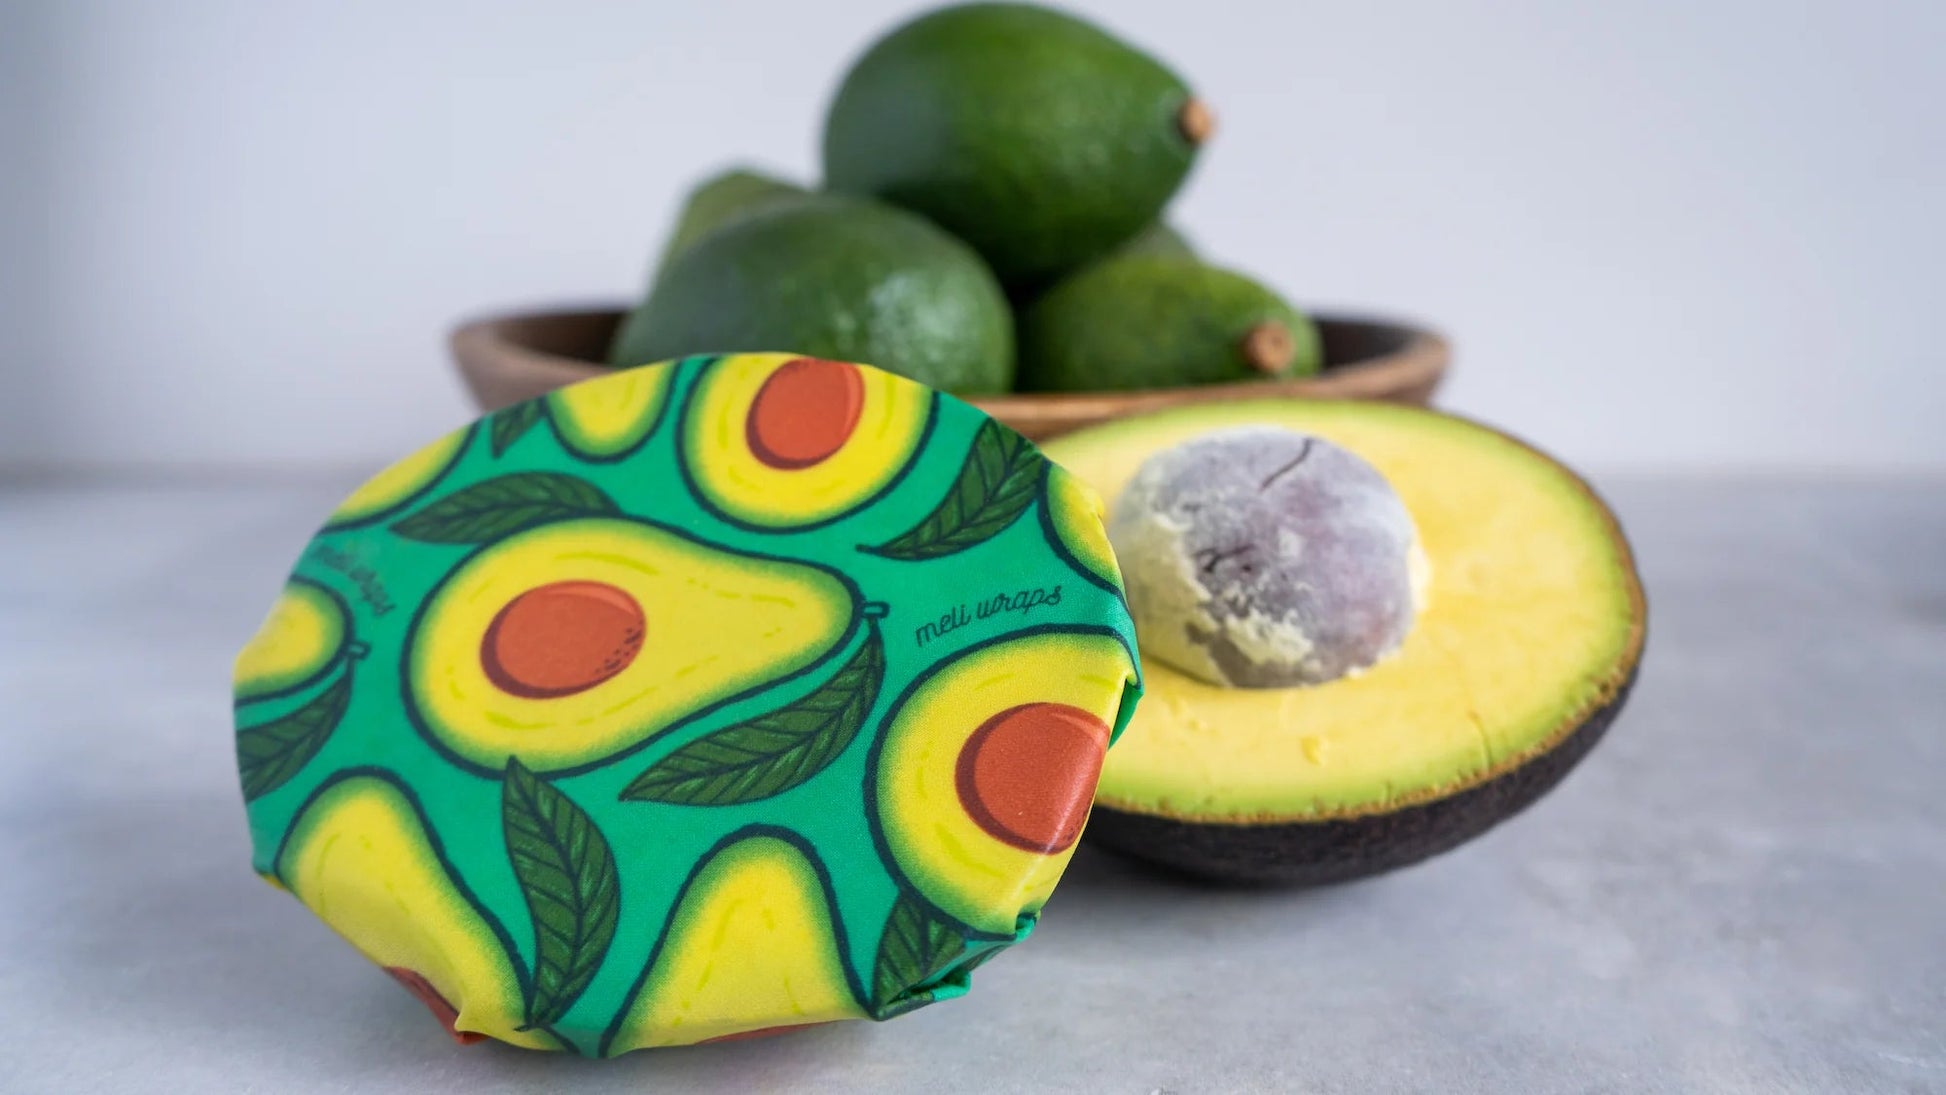 NEW Avocado Packs ~ Case of 10 Variety Size 3 Packs - Tree Spirit Wellness